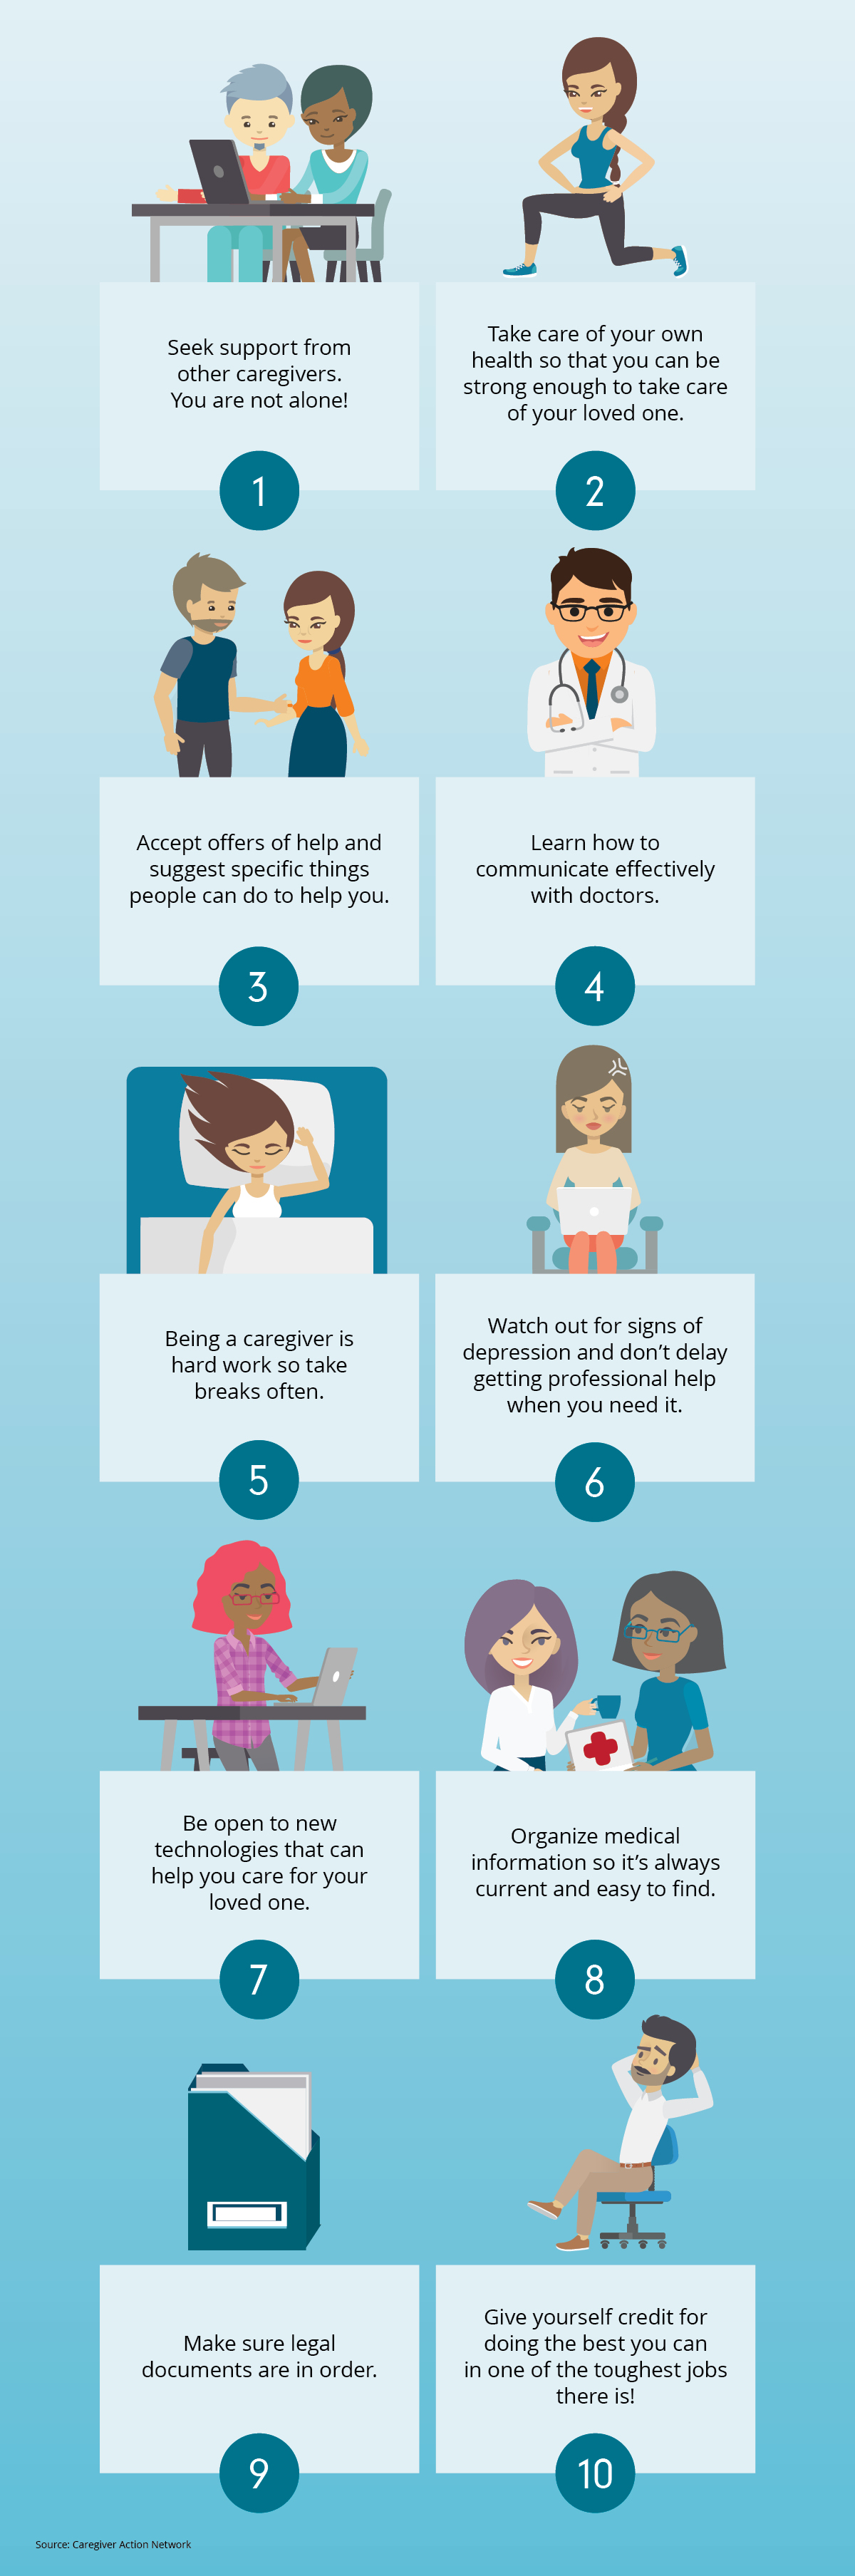 10 family caregiver tips to help avoid caregiver fatigue and caregiver burnout. 